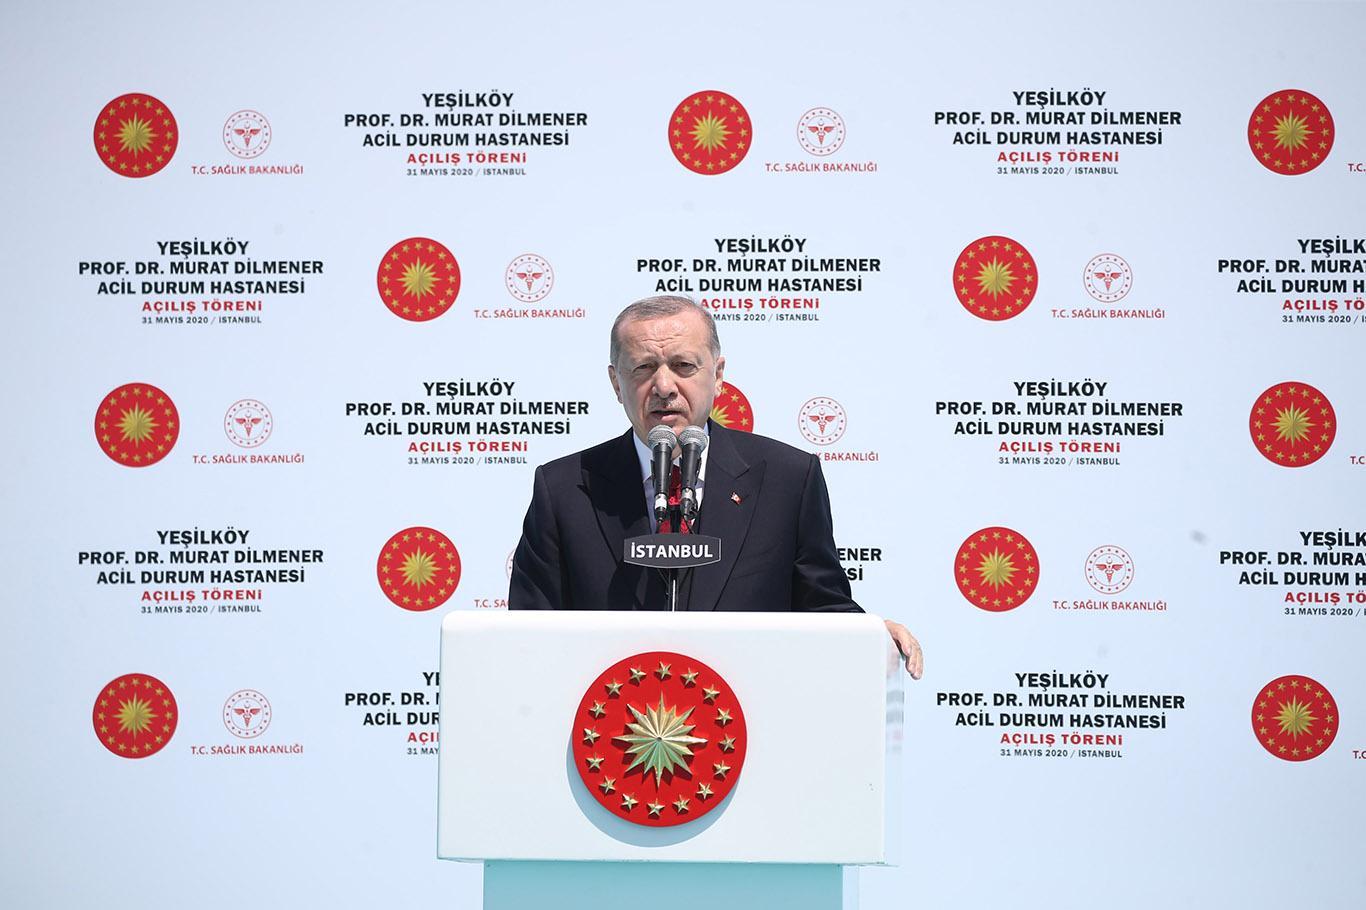 Erdoğan: Turkey has become a center of attraction in healthcare